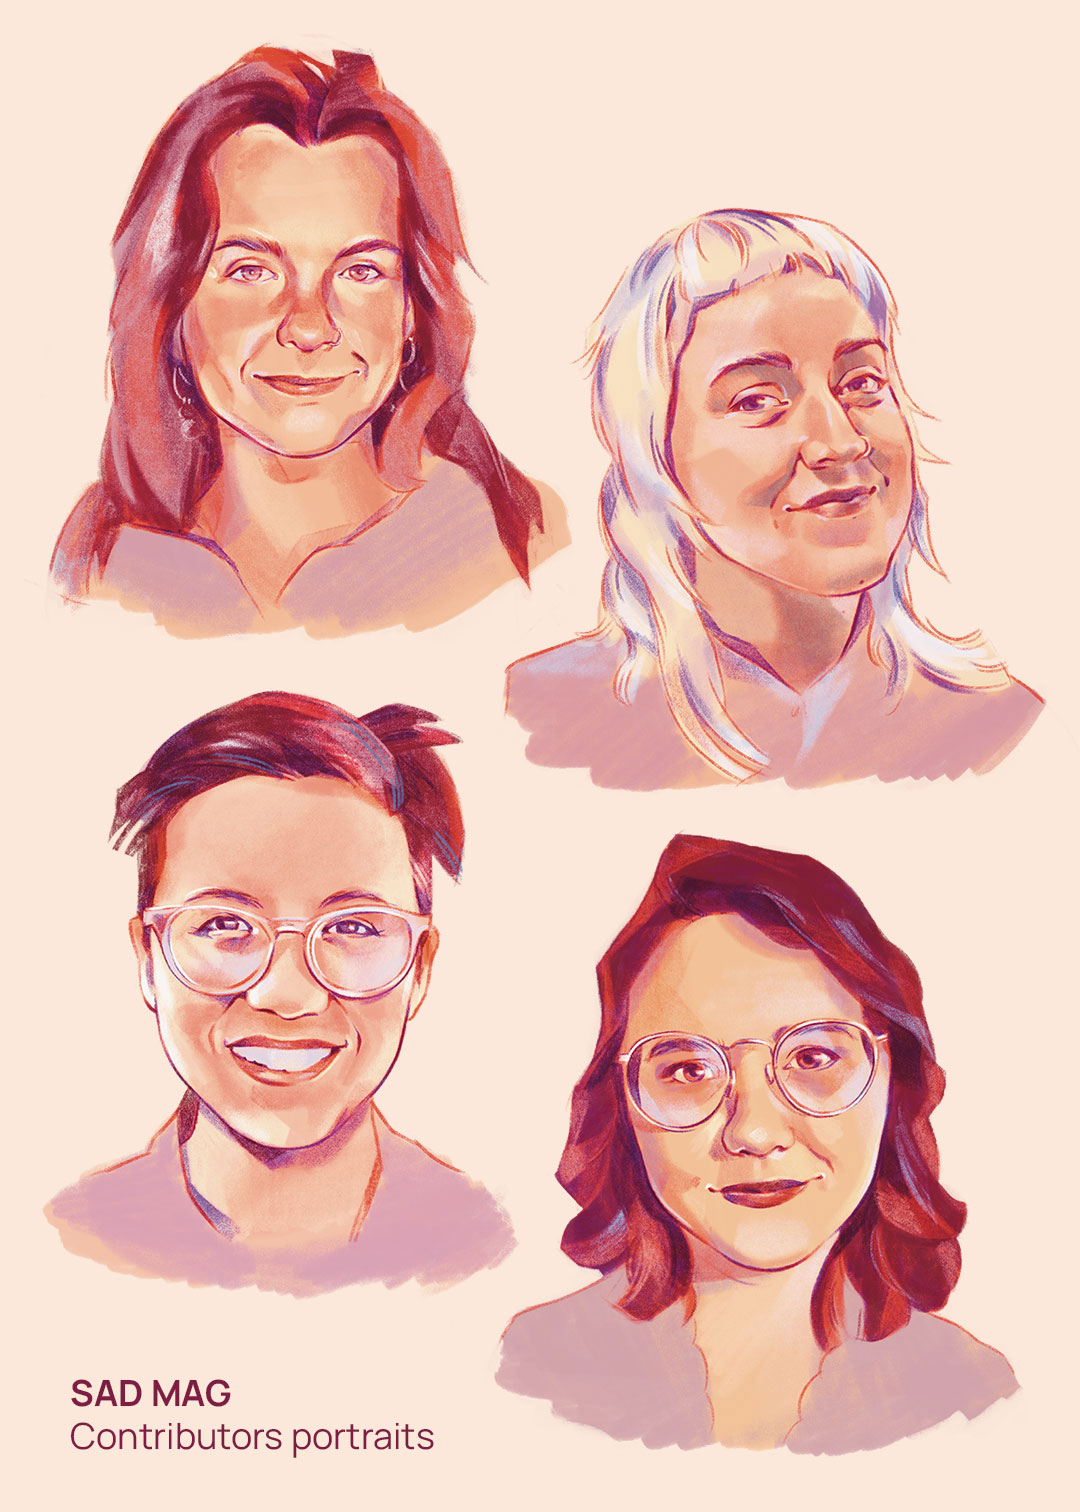 Four portrait illustrations of contributors for SAD Magazine.